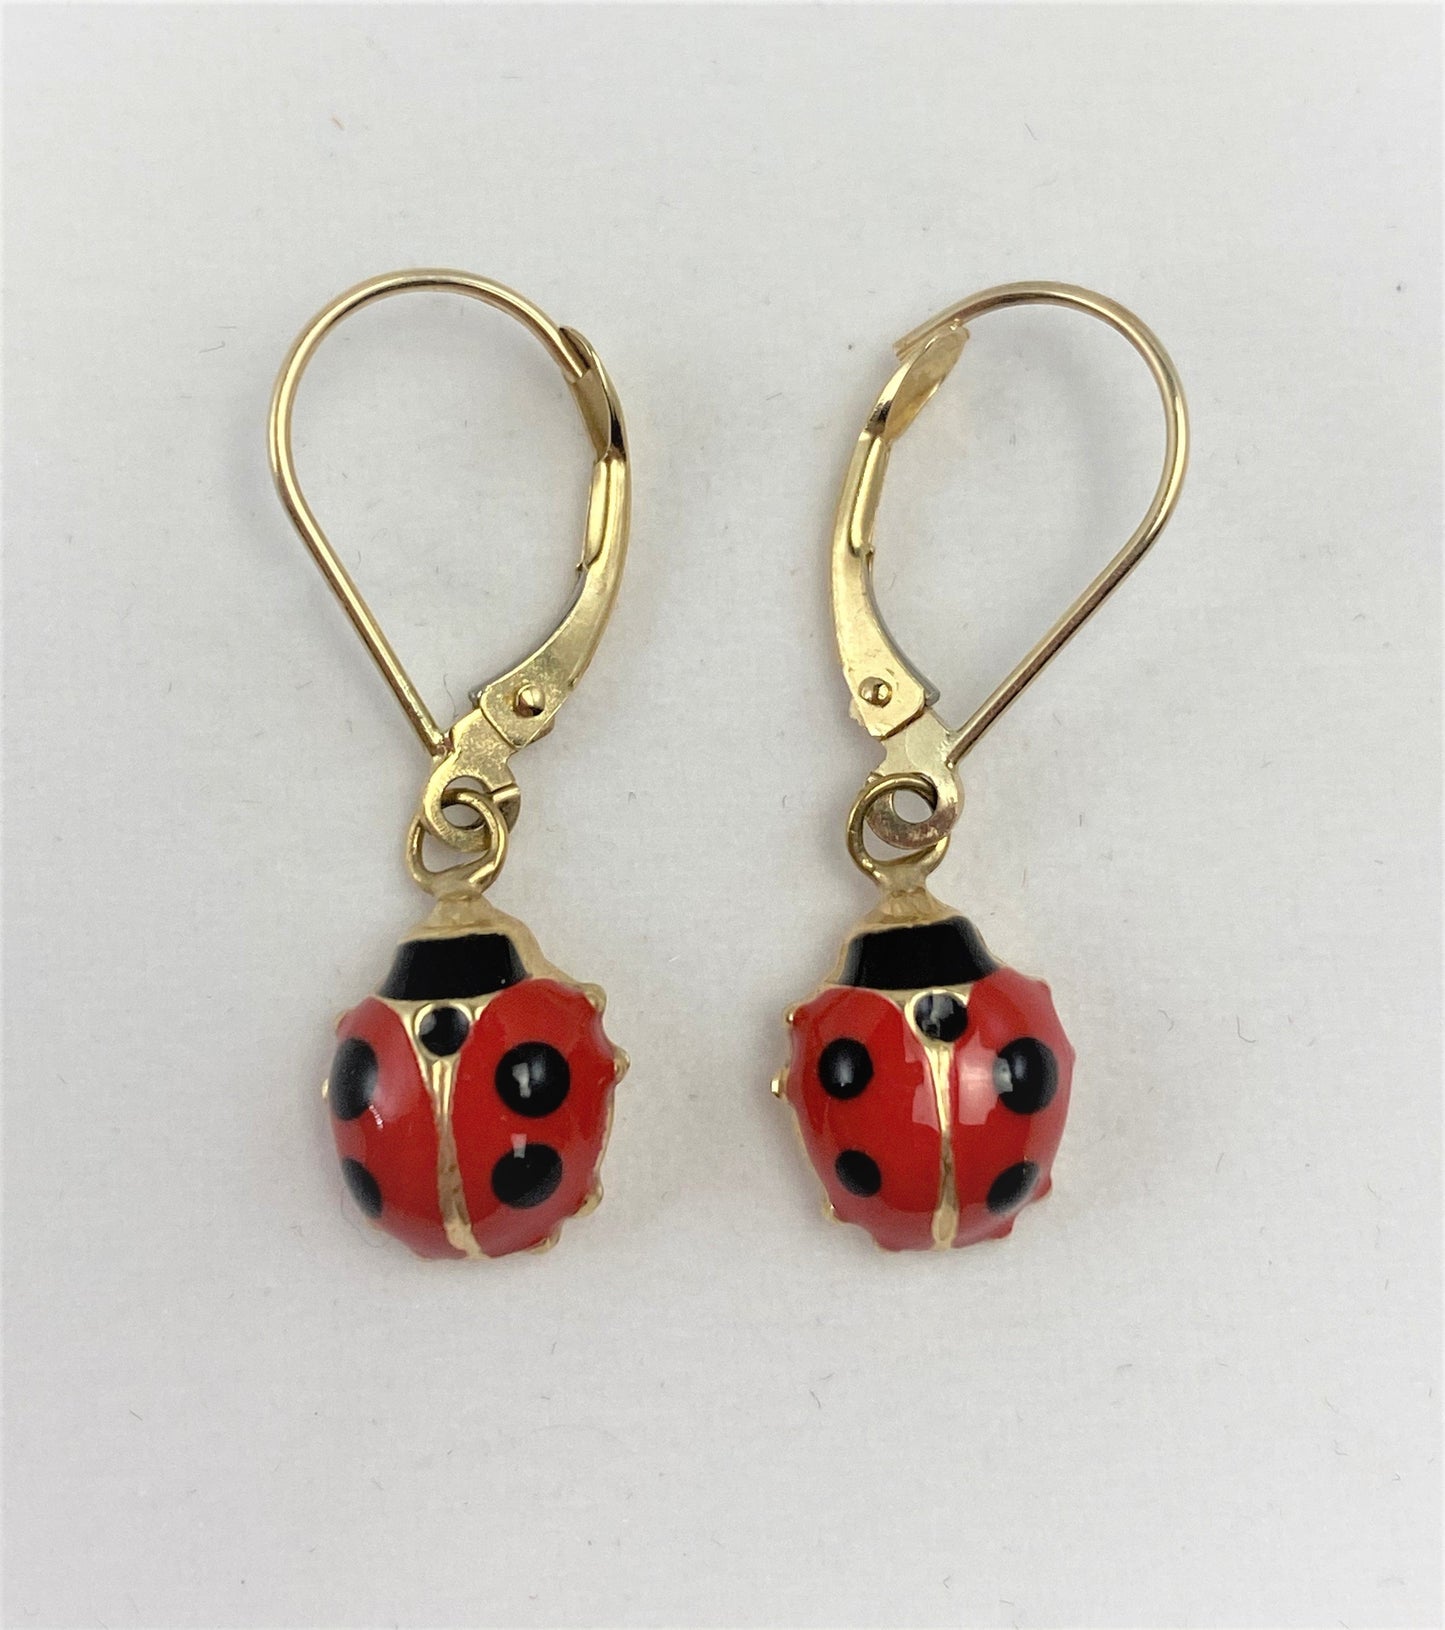 14k Gold Jewelry Designer 14KT & Guilloche Enamel Ladybug Necklace & Earrings Demi Parure Set